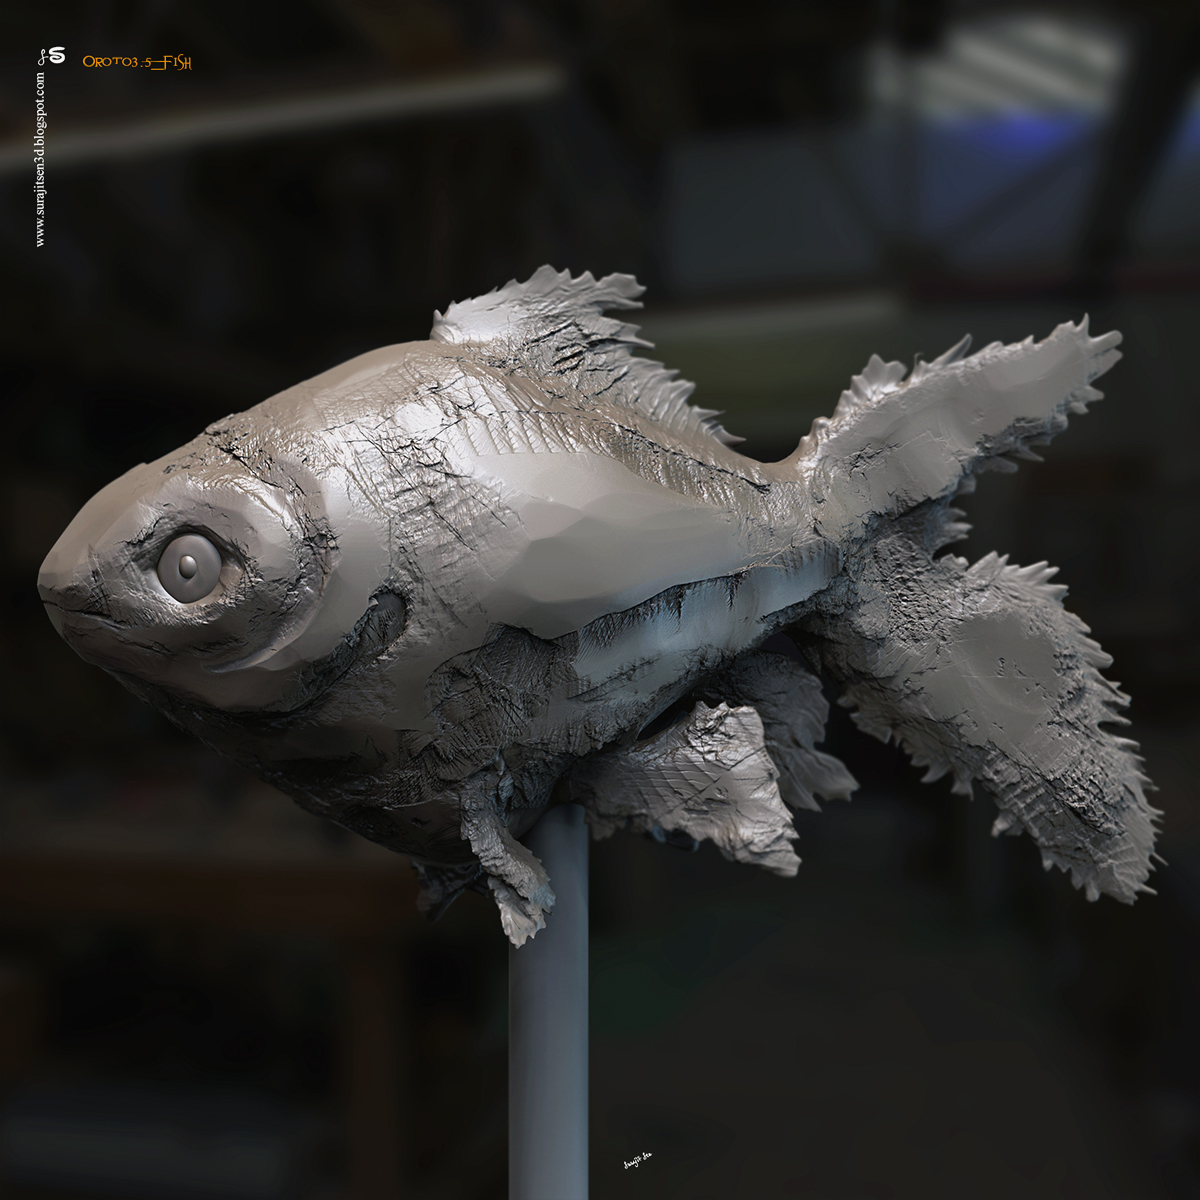 Oroto3.5_Fish_Digital_SCulpture_SurajitSen_Nov2020AL